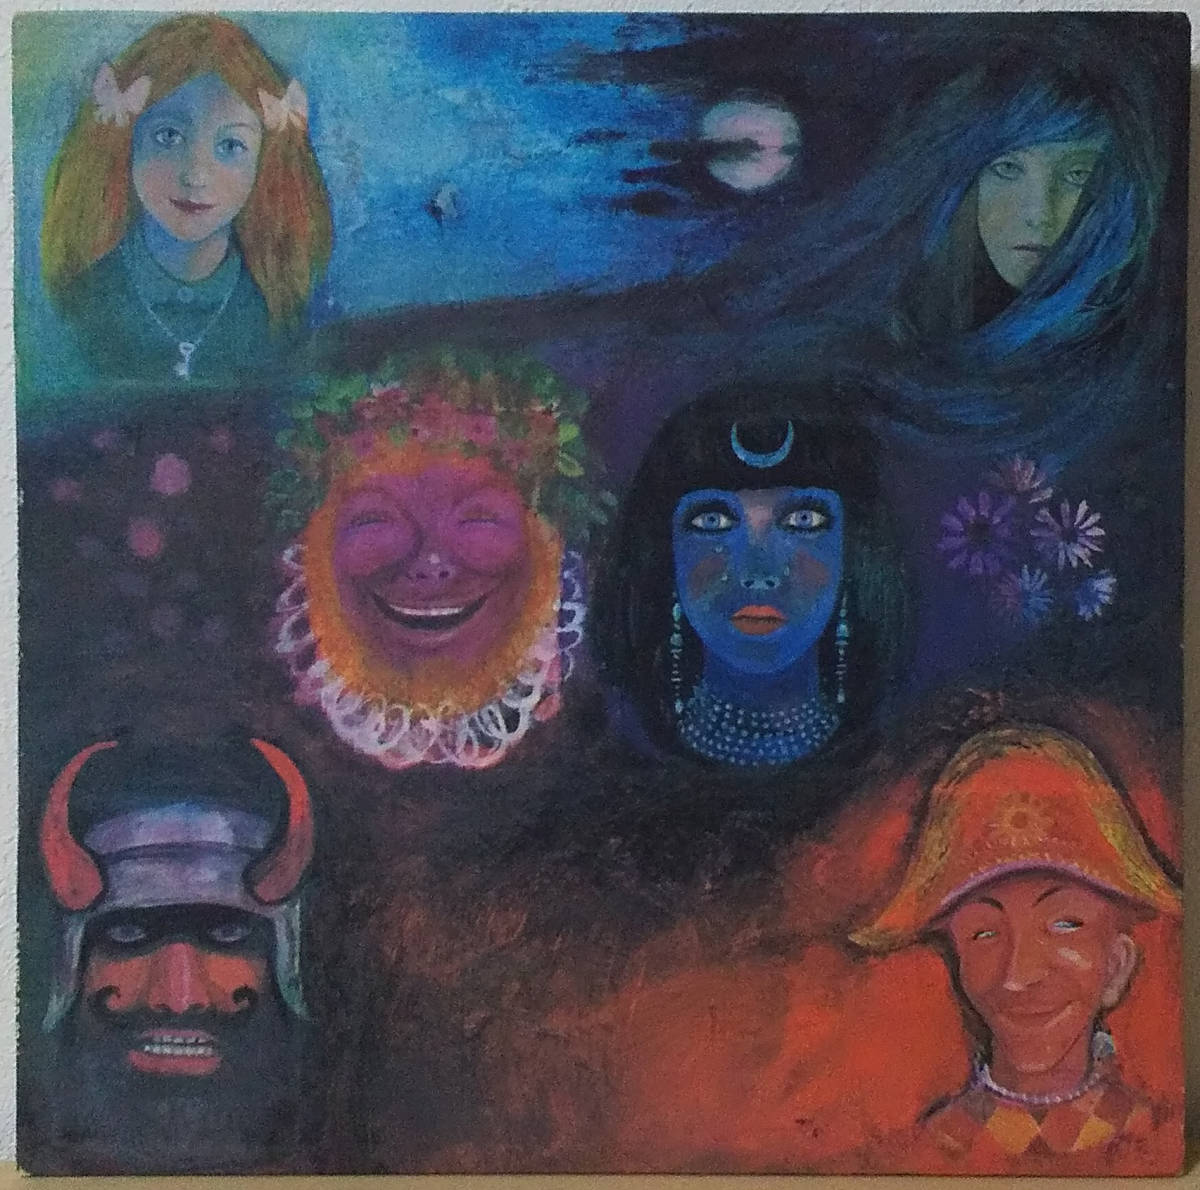 King Crimson - In The Wake Of Poseidon(Monarch Pressing) US盤 LP, Gatefold (Textured) Atlantic - SD 8266 キング・クリムゾン 1976年_画像1